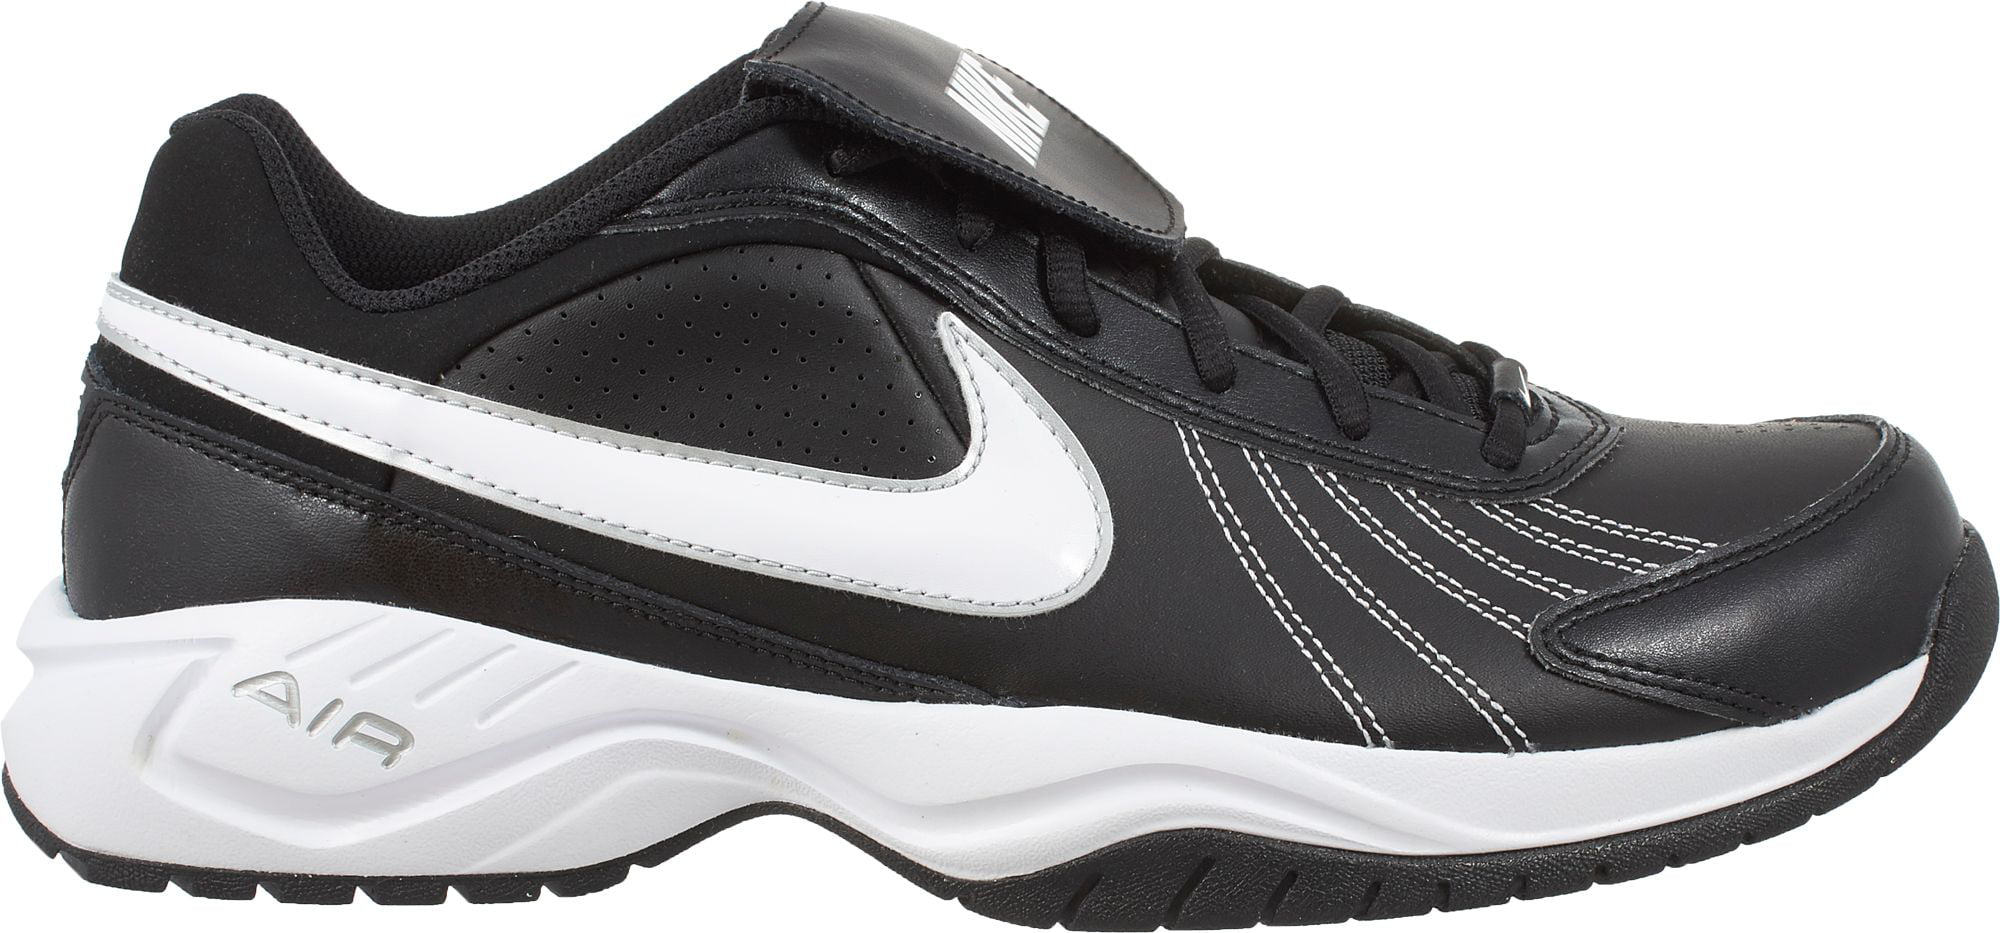 Nike Men's Air Diamond Baseball Turf Shoes - Walmart.com ...